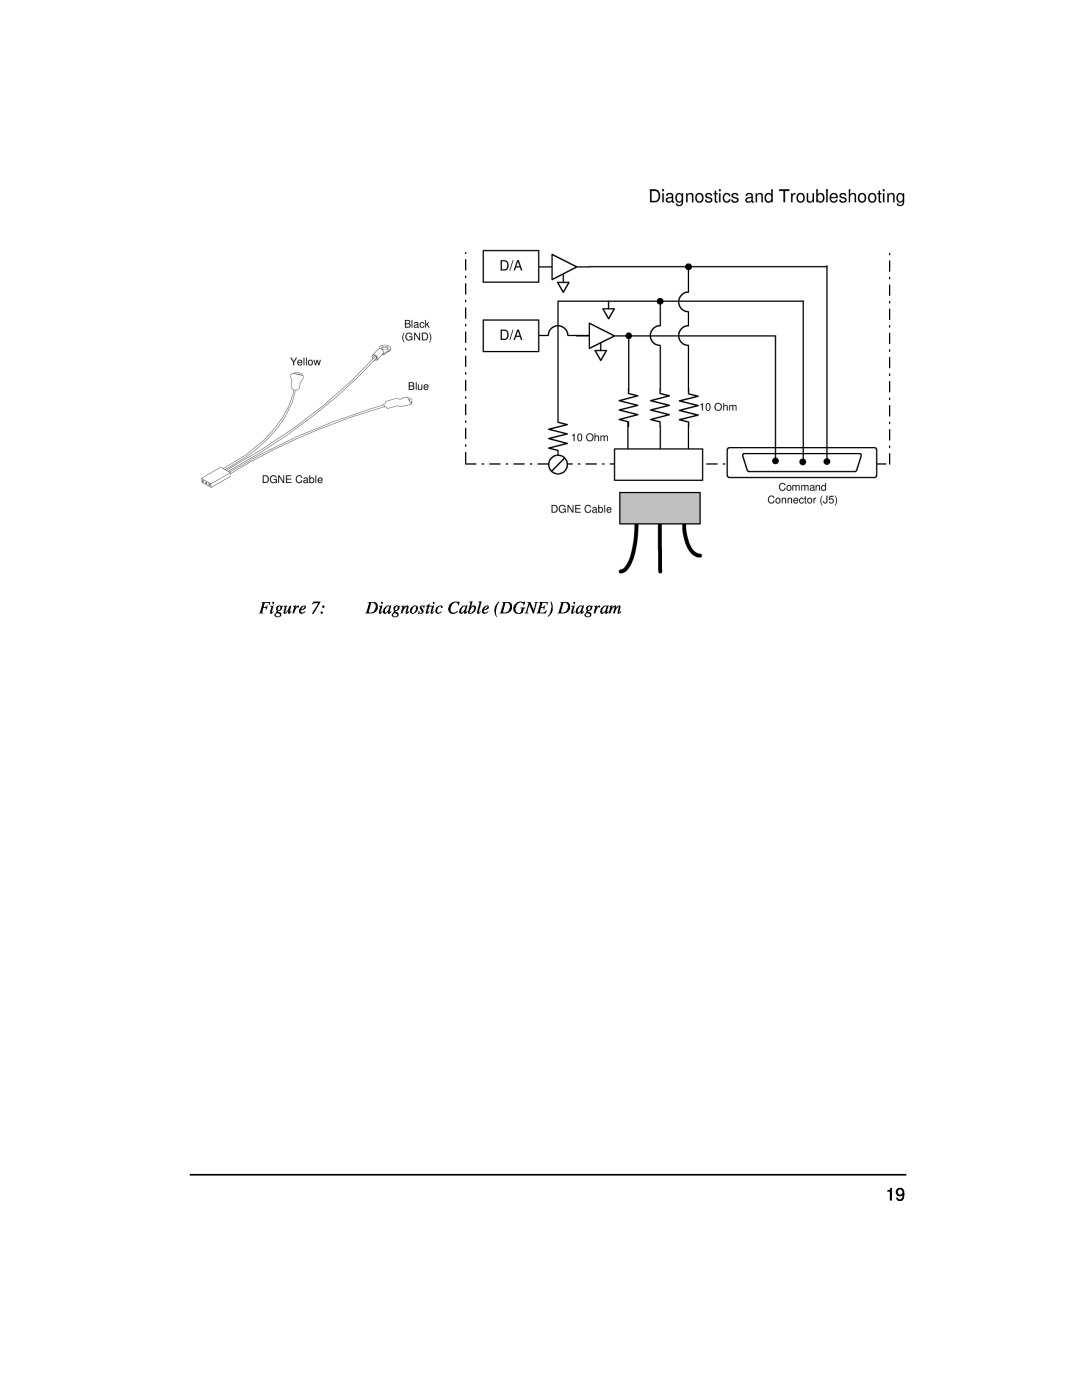 Emerson 400508-02 installation manual Diagnostic Cable DGNE Diagram, Diagnostics and Troubleshooting, D/A D/A 